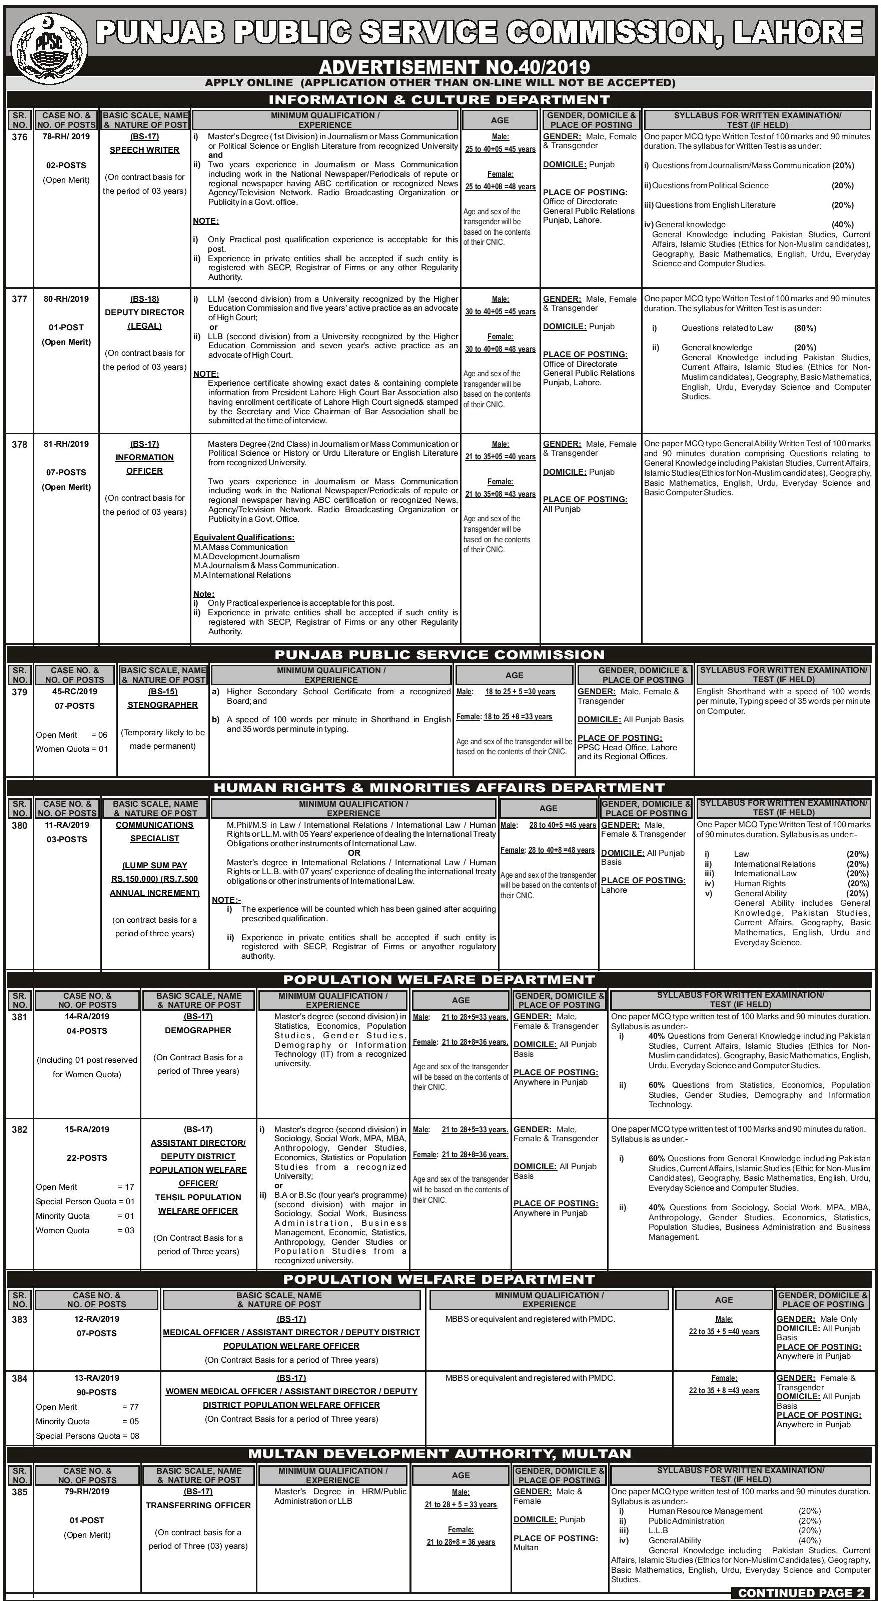 150+ PPSC Govt jobs in Punjab Public Service Commission December 2019